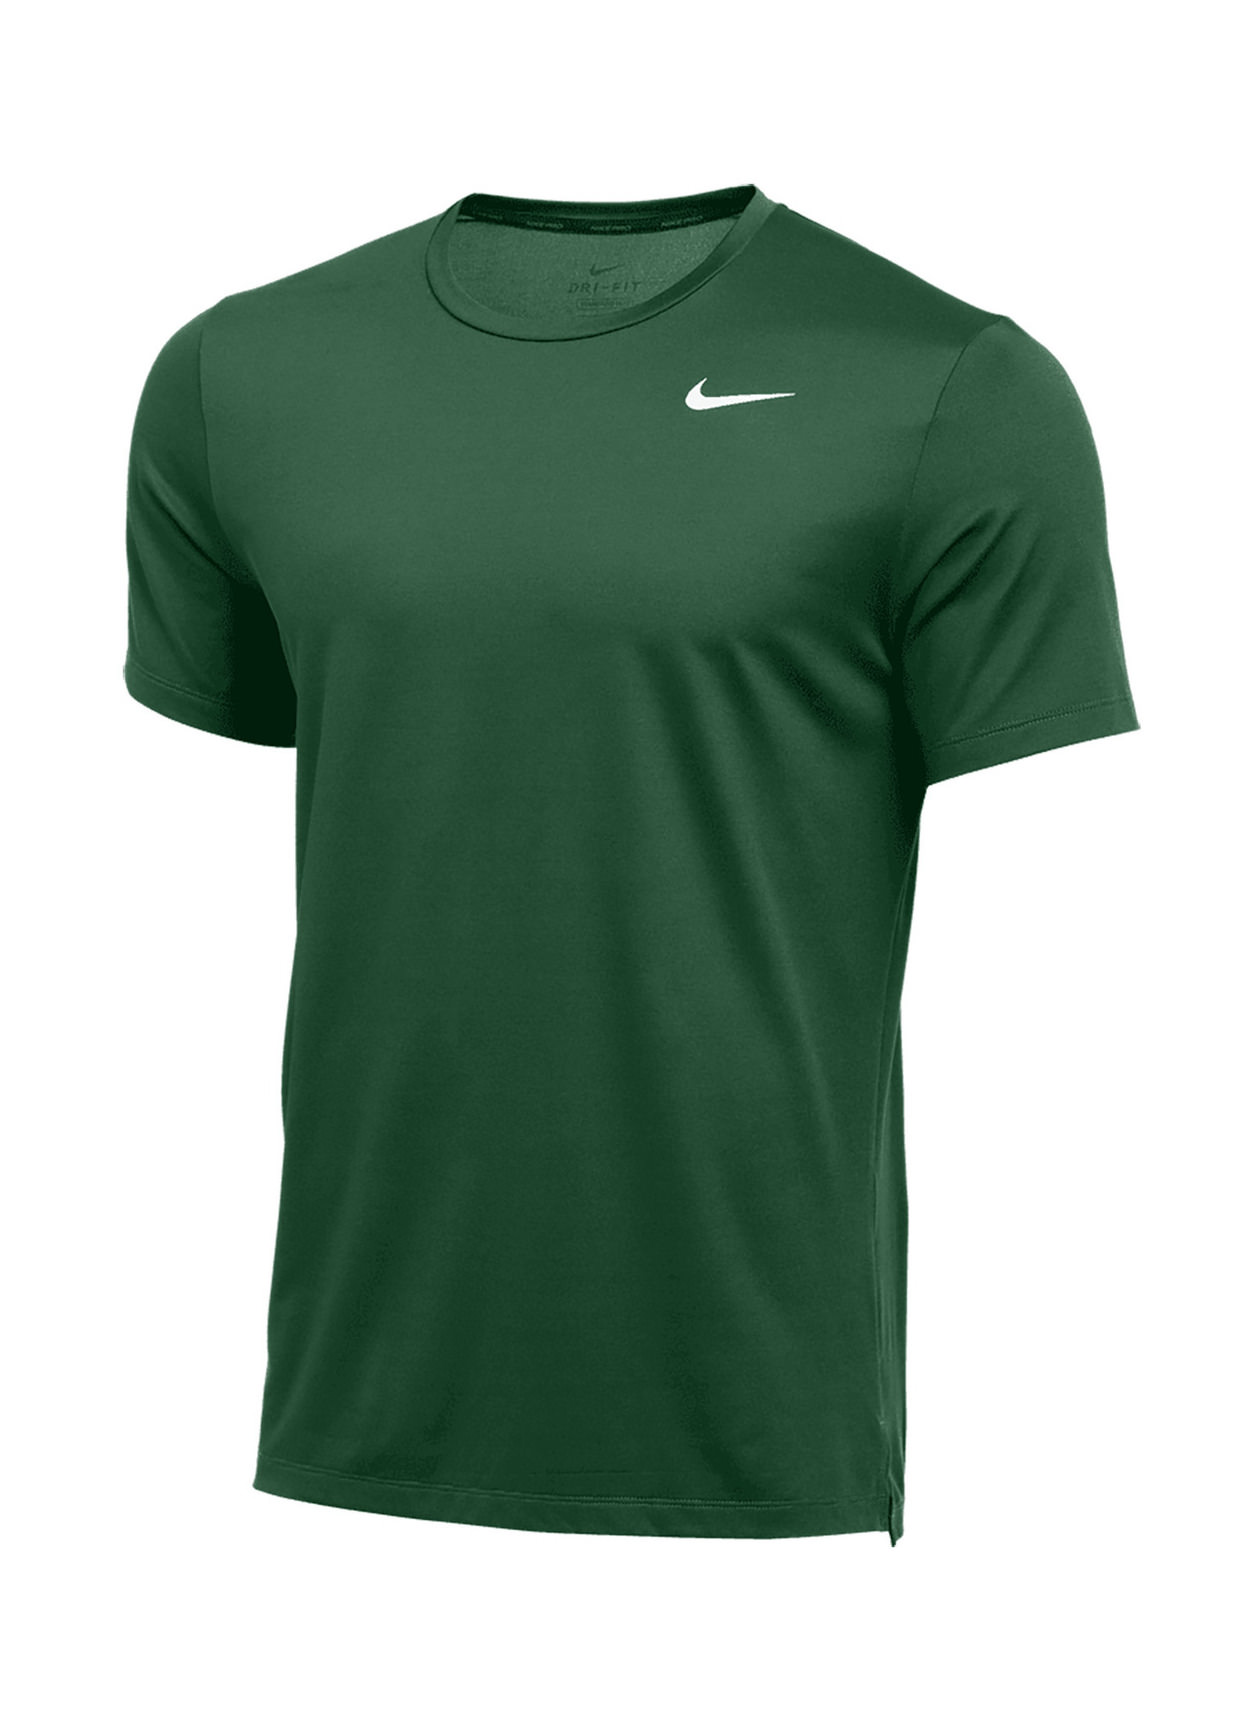 Nike Men's Team Dark Green / Heather Dri-FIT Training T-Shirt